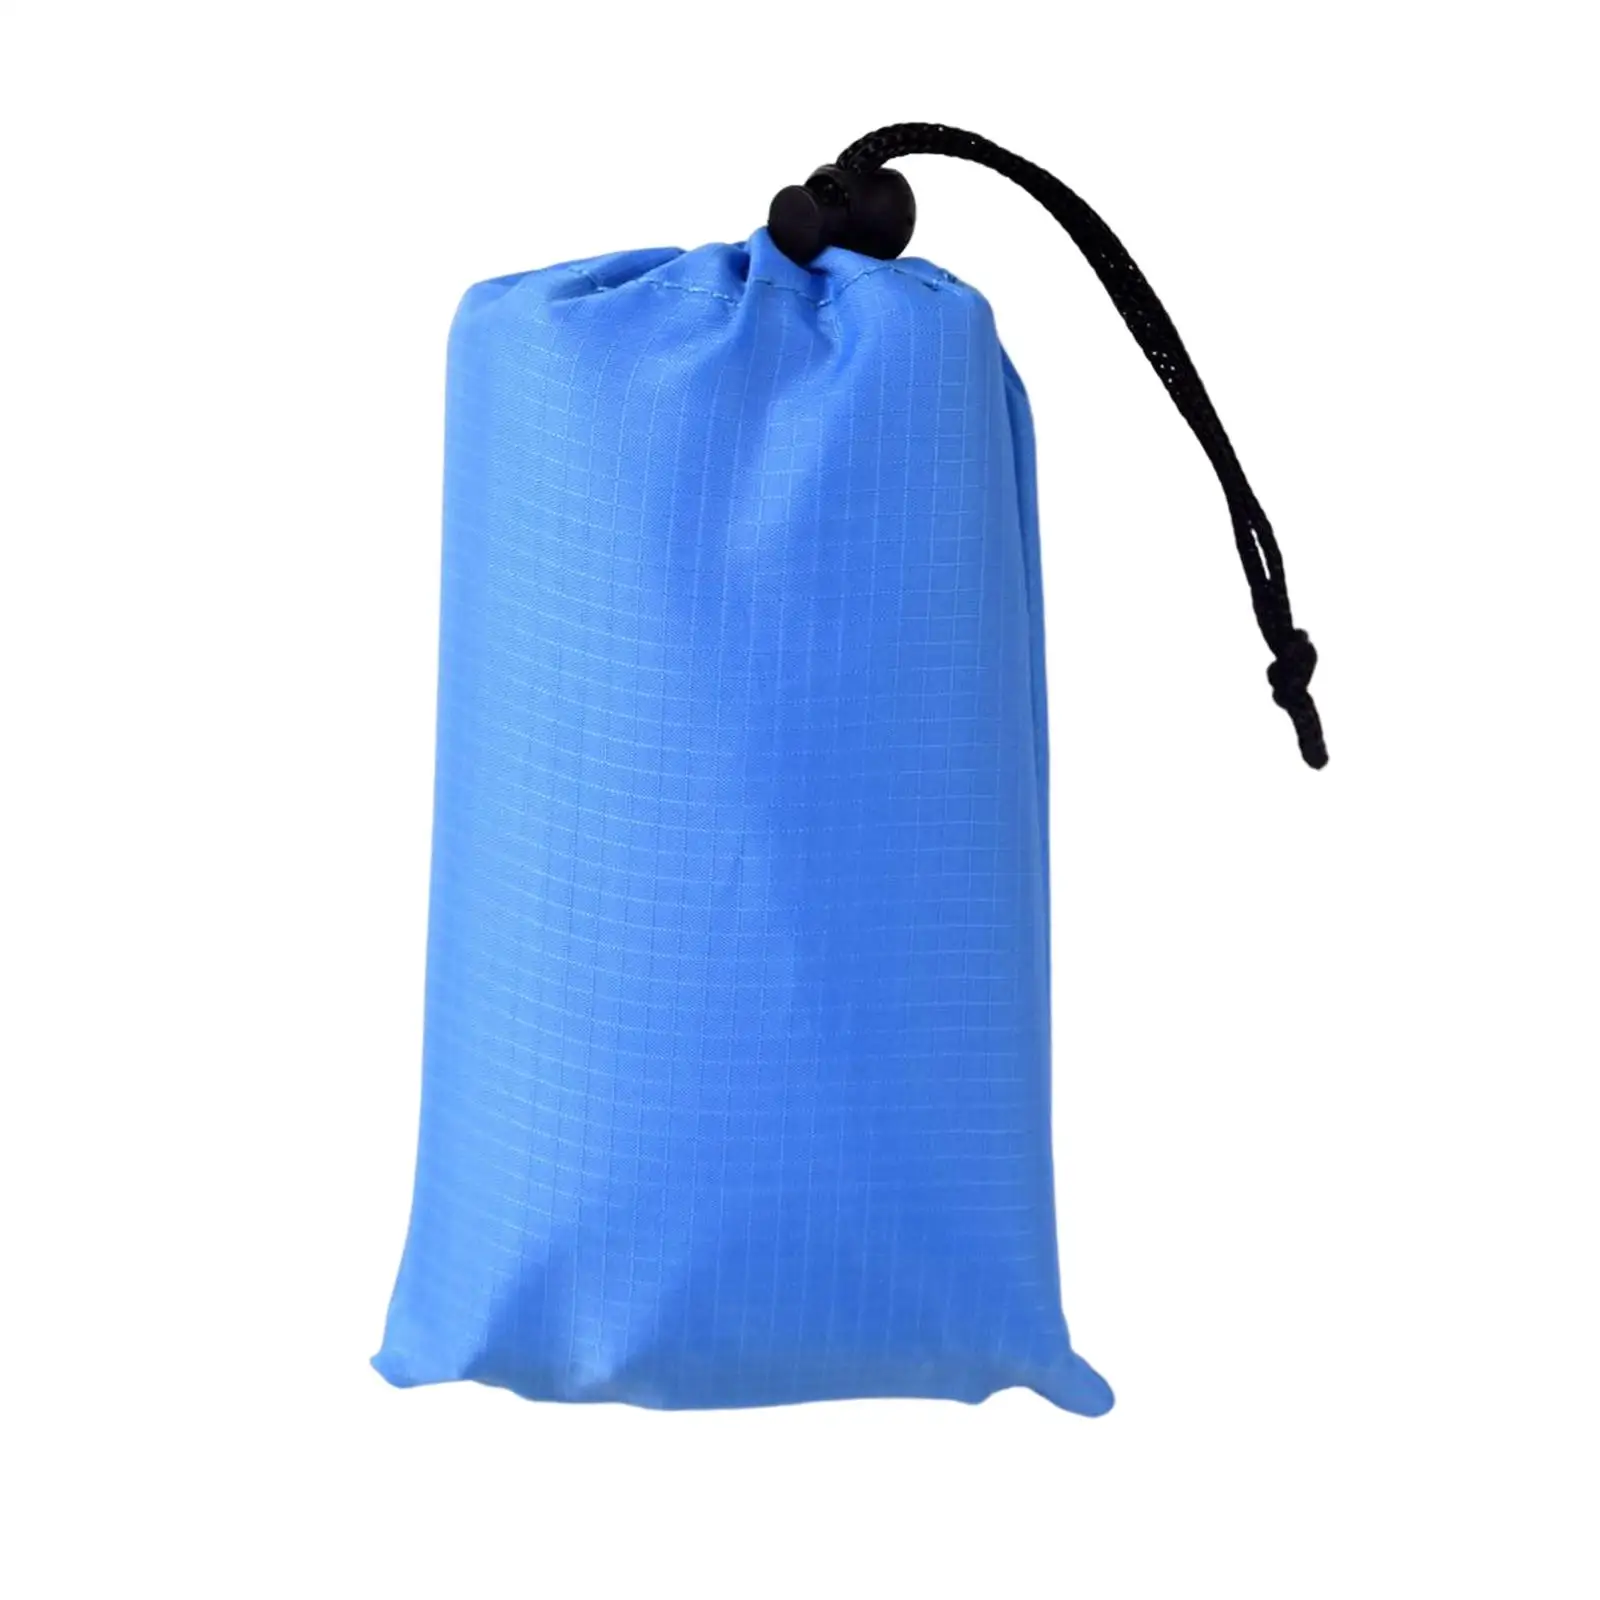 Outdoor Pocket Picnic Blanket Portable Lightweight Sandproof Rug Tarp Travel Waterproof Travel Mini Outdoor Camping Foldable Mat